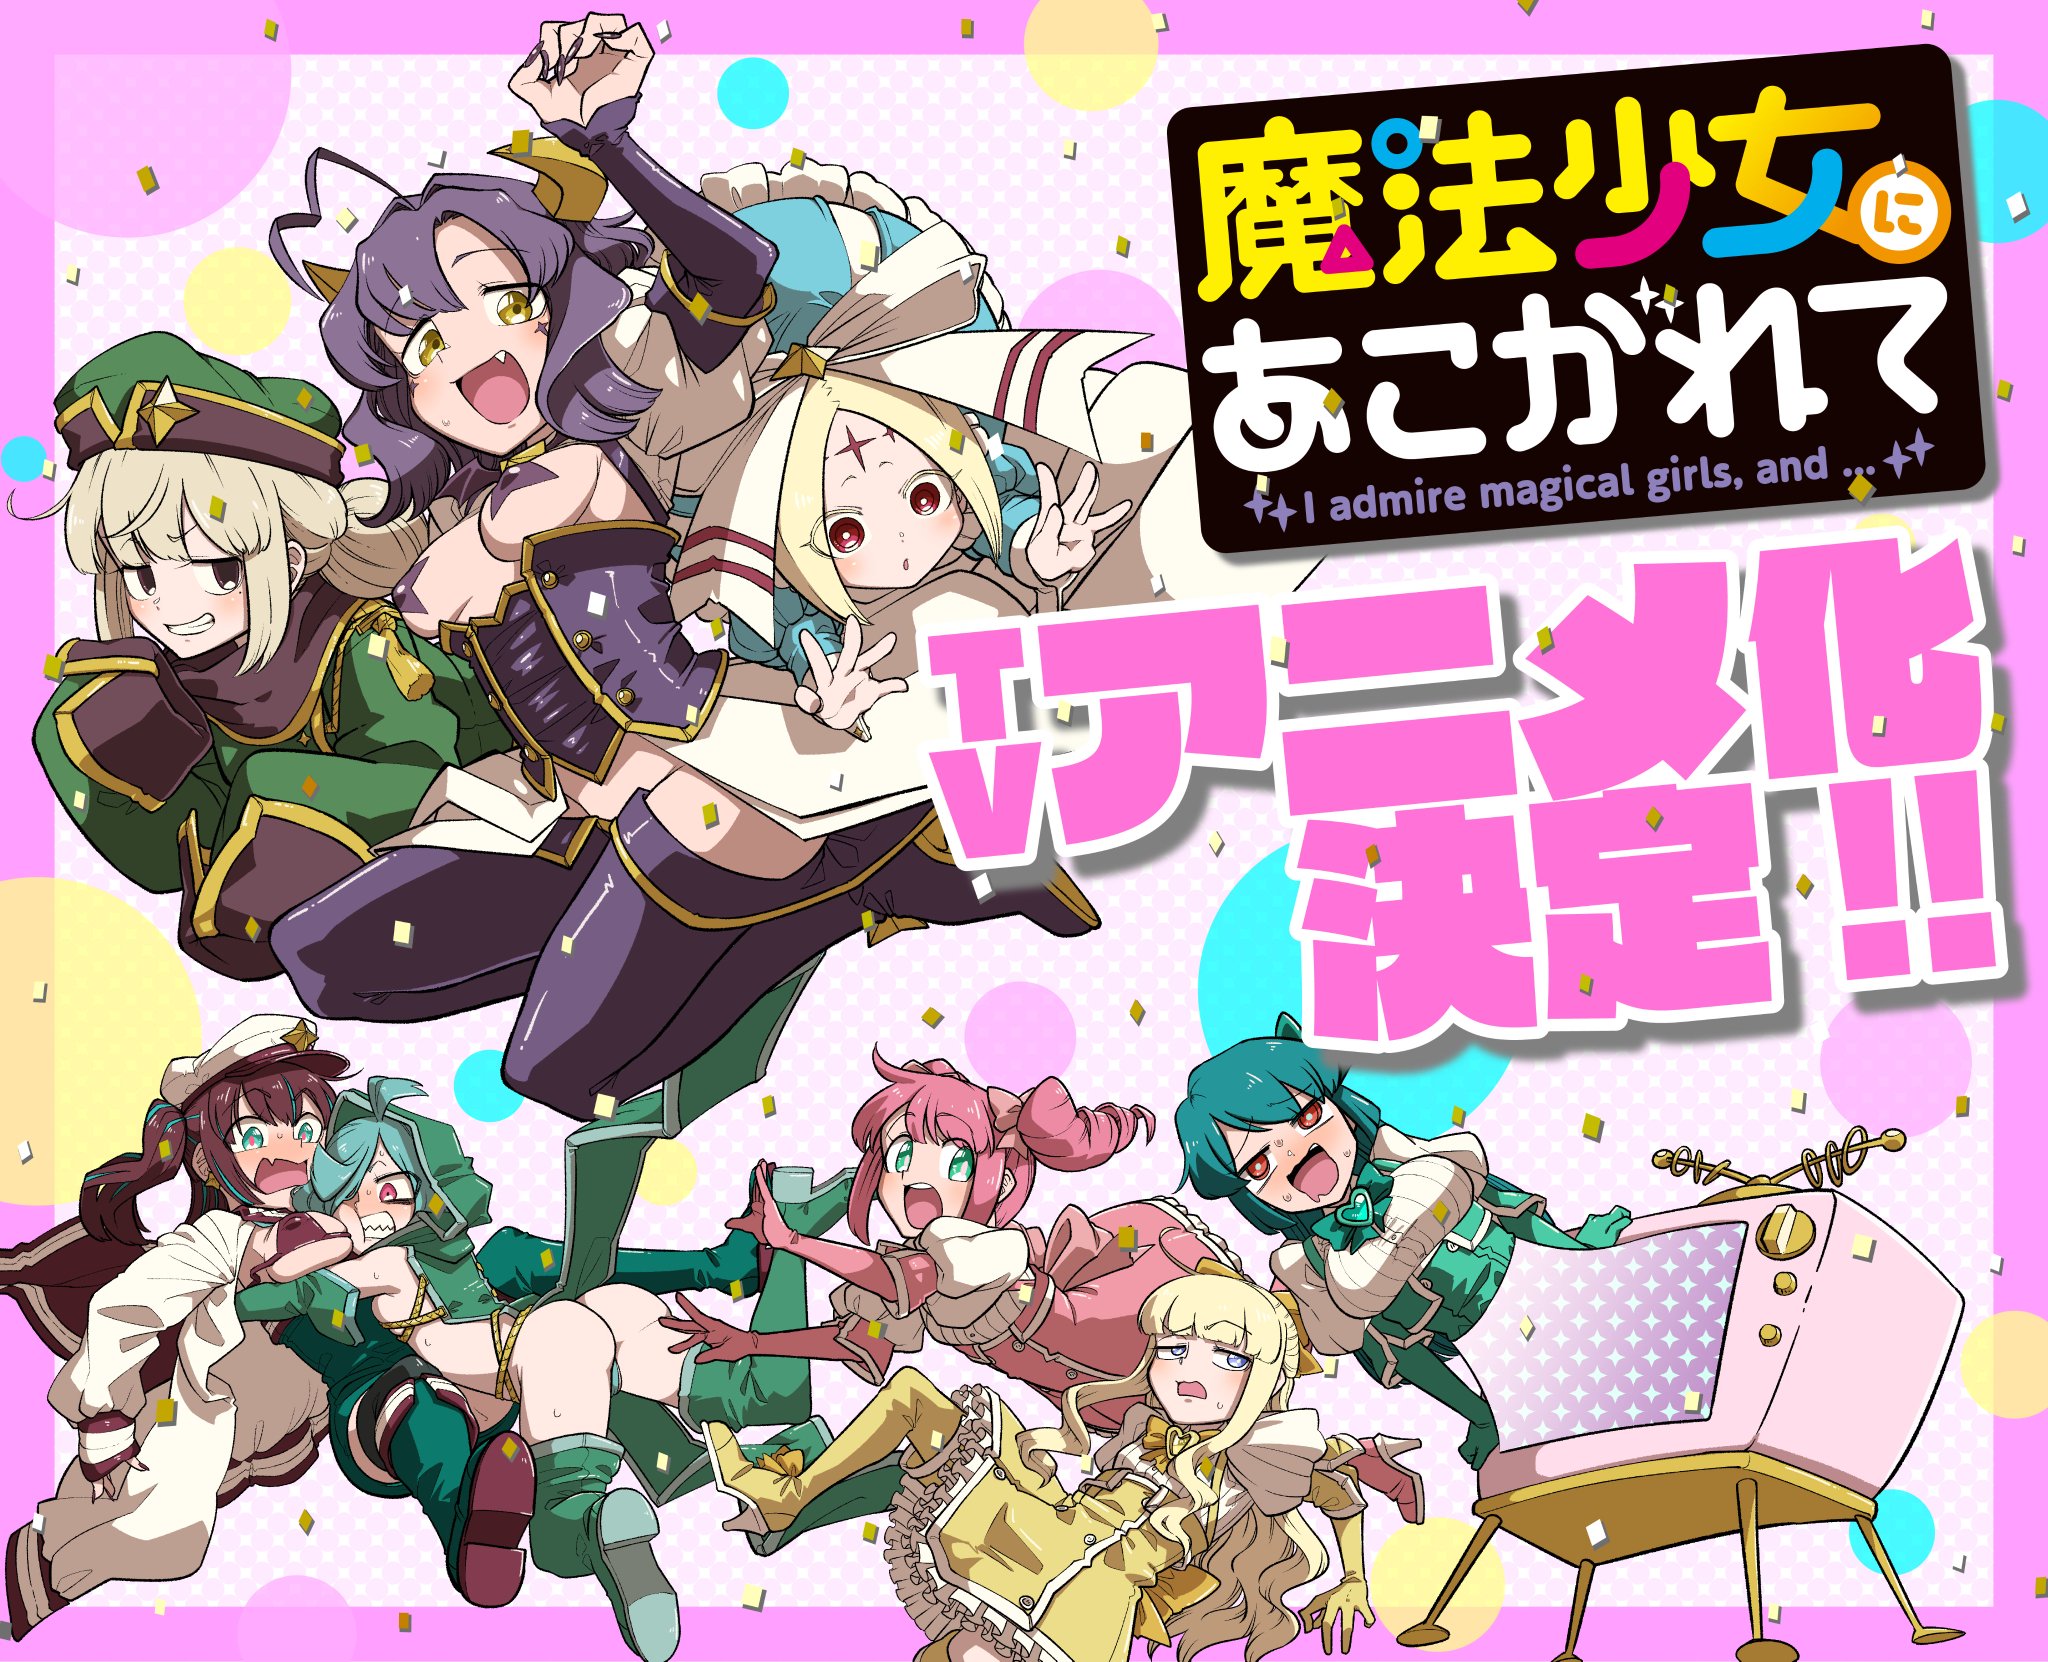 Gushing Over Magical Girls Comedy Manga Gets TV Anime Adaptation